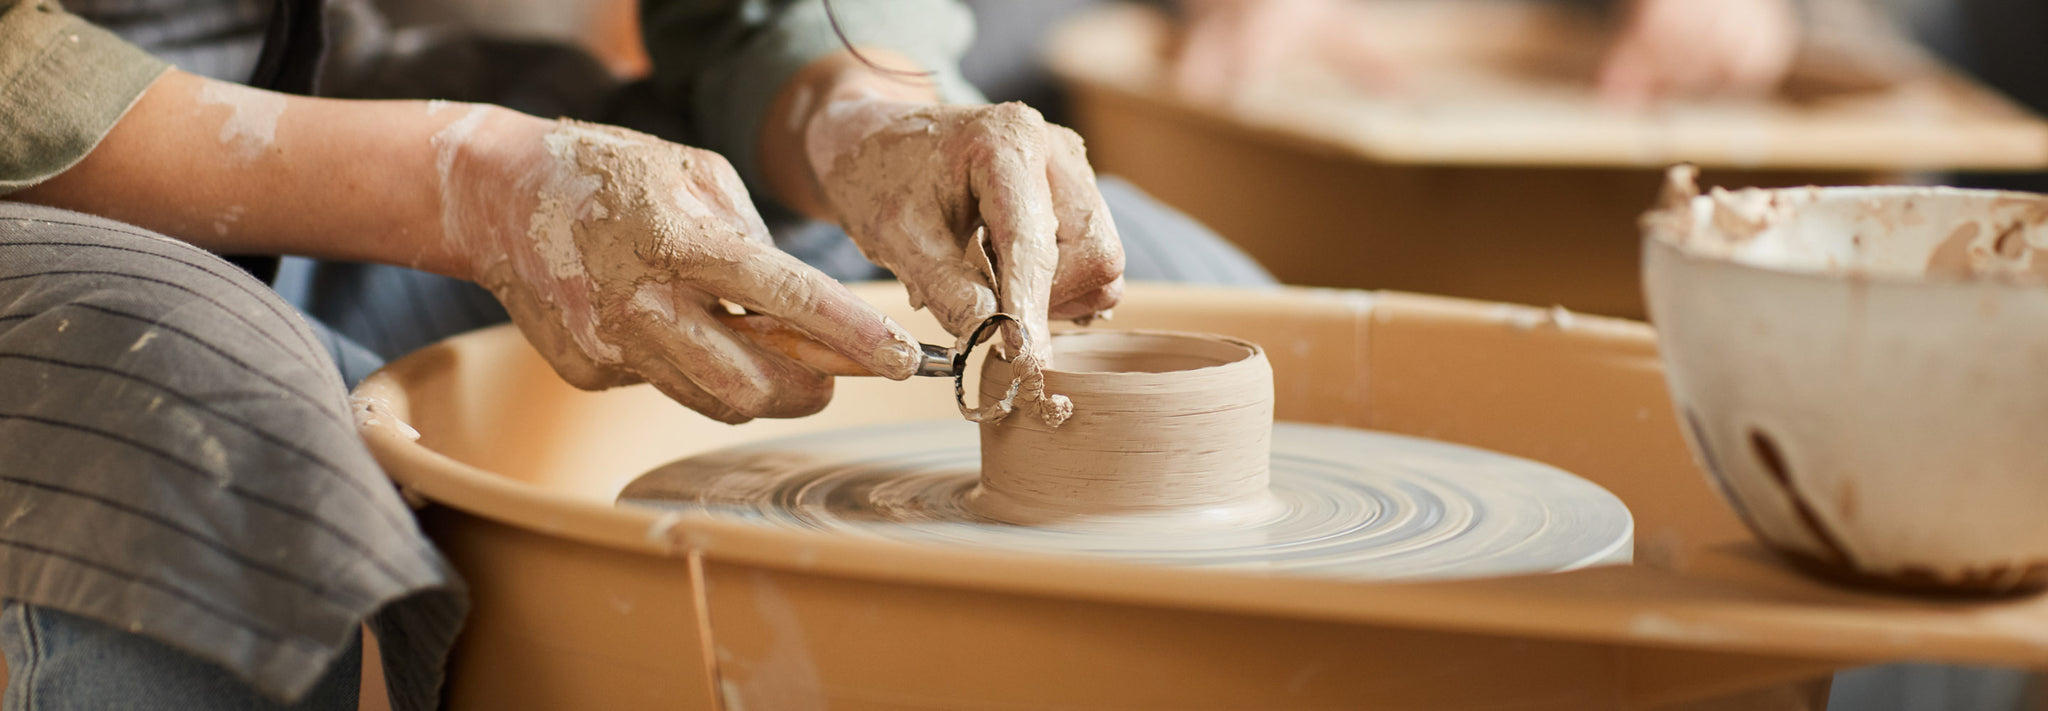 Pottery tool kit - pick up only - Echo Art Studio